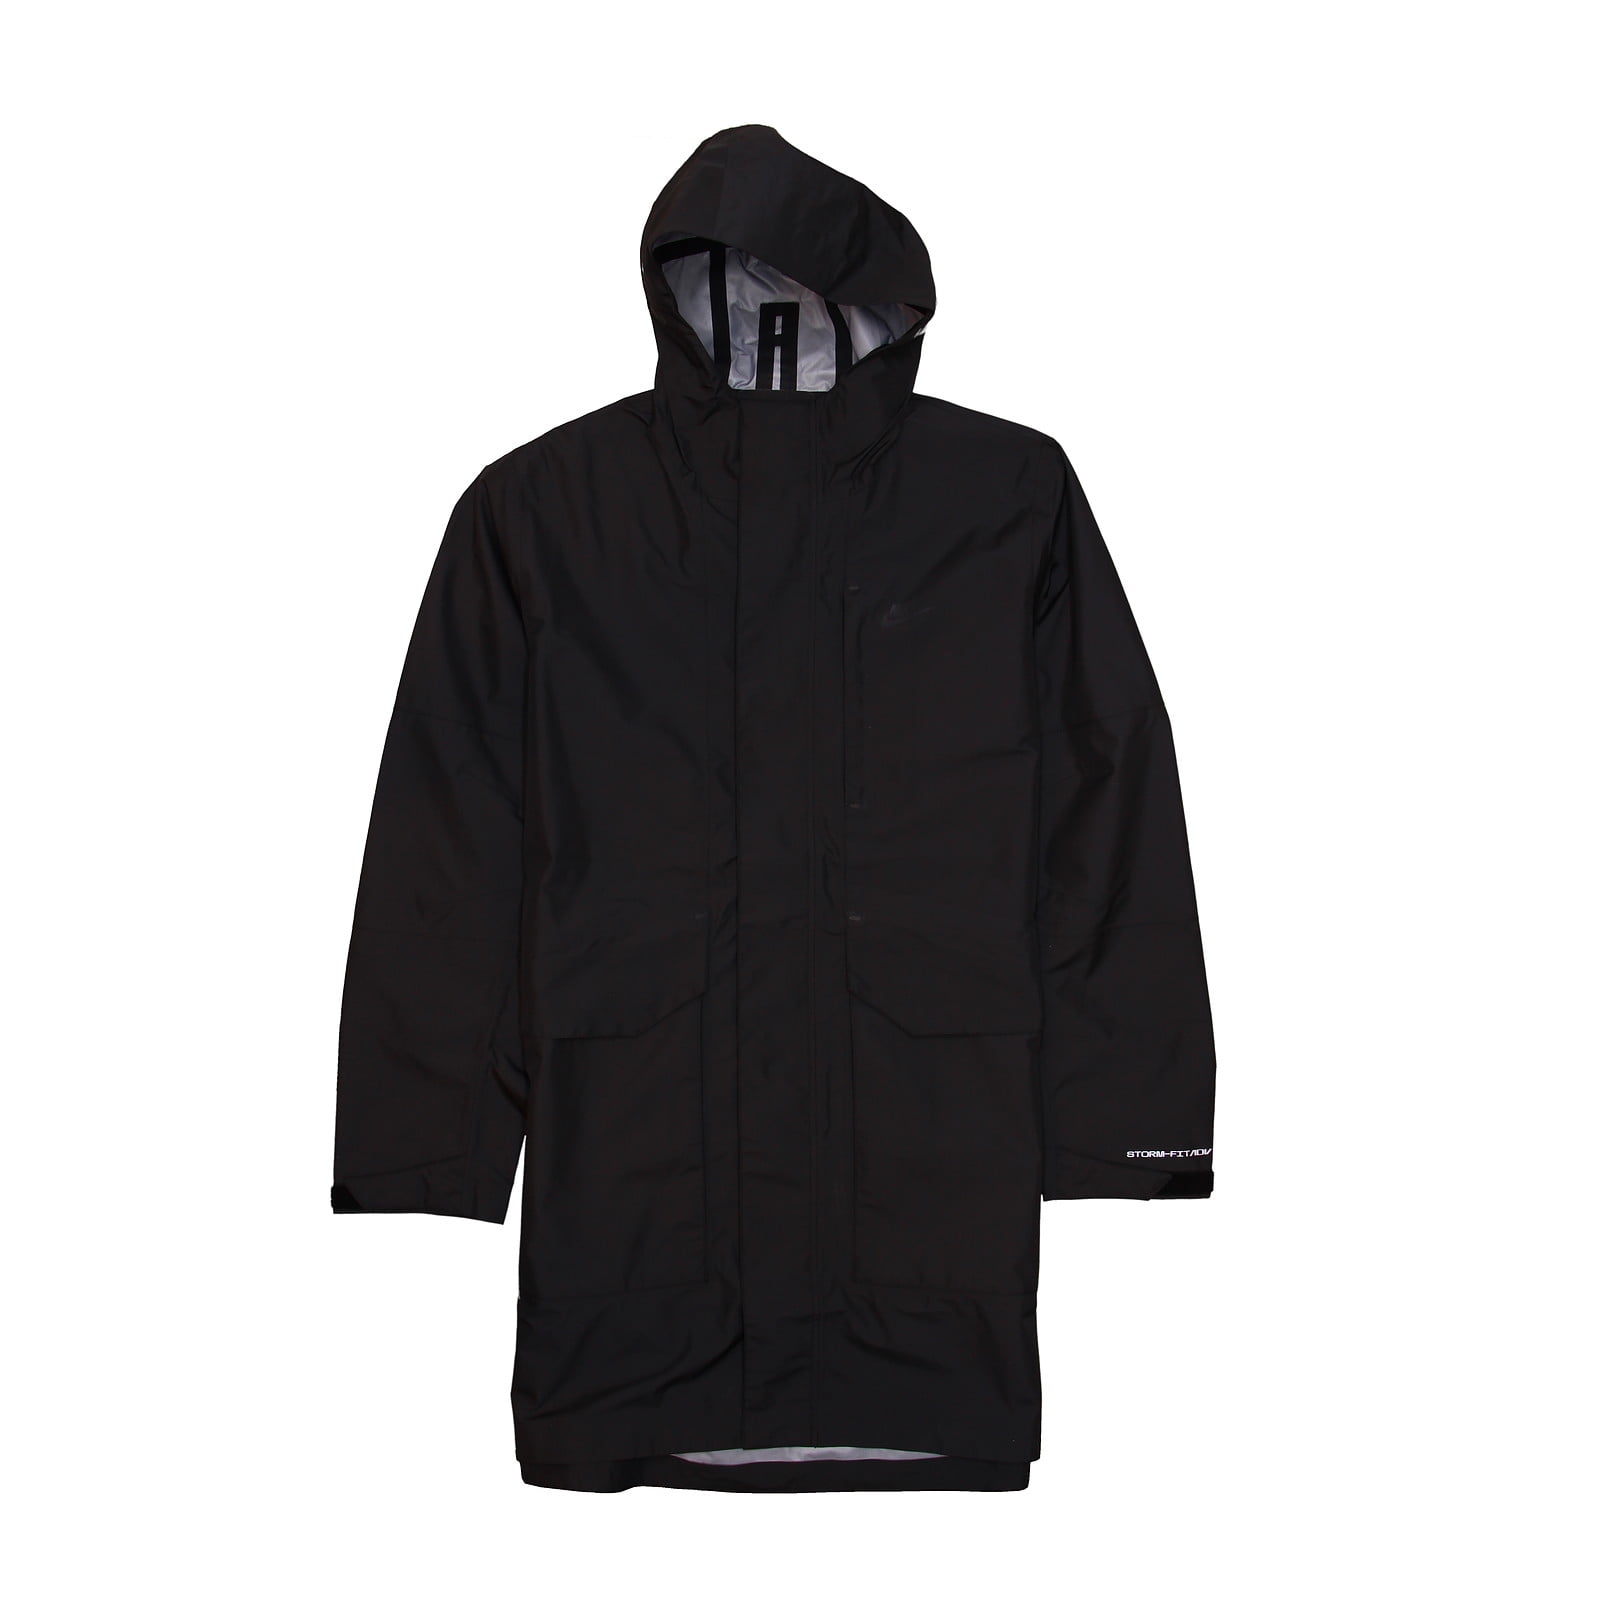 (2XLarge, Mens Black) Storm-Fit Shell Jacket Sportswear Nike Parka ADV